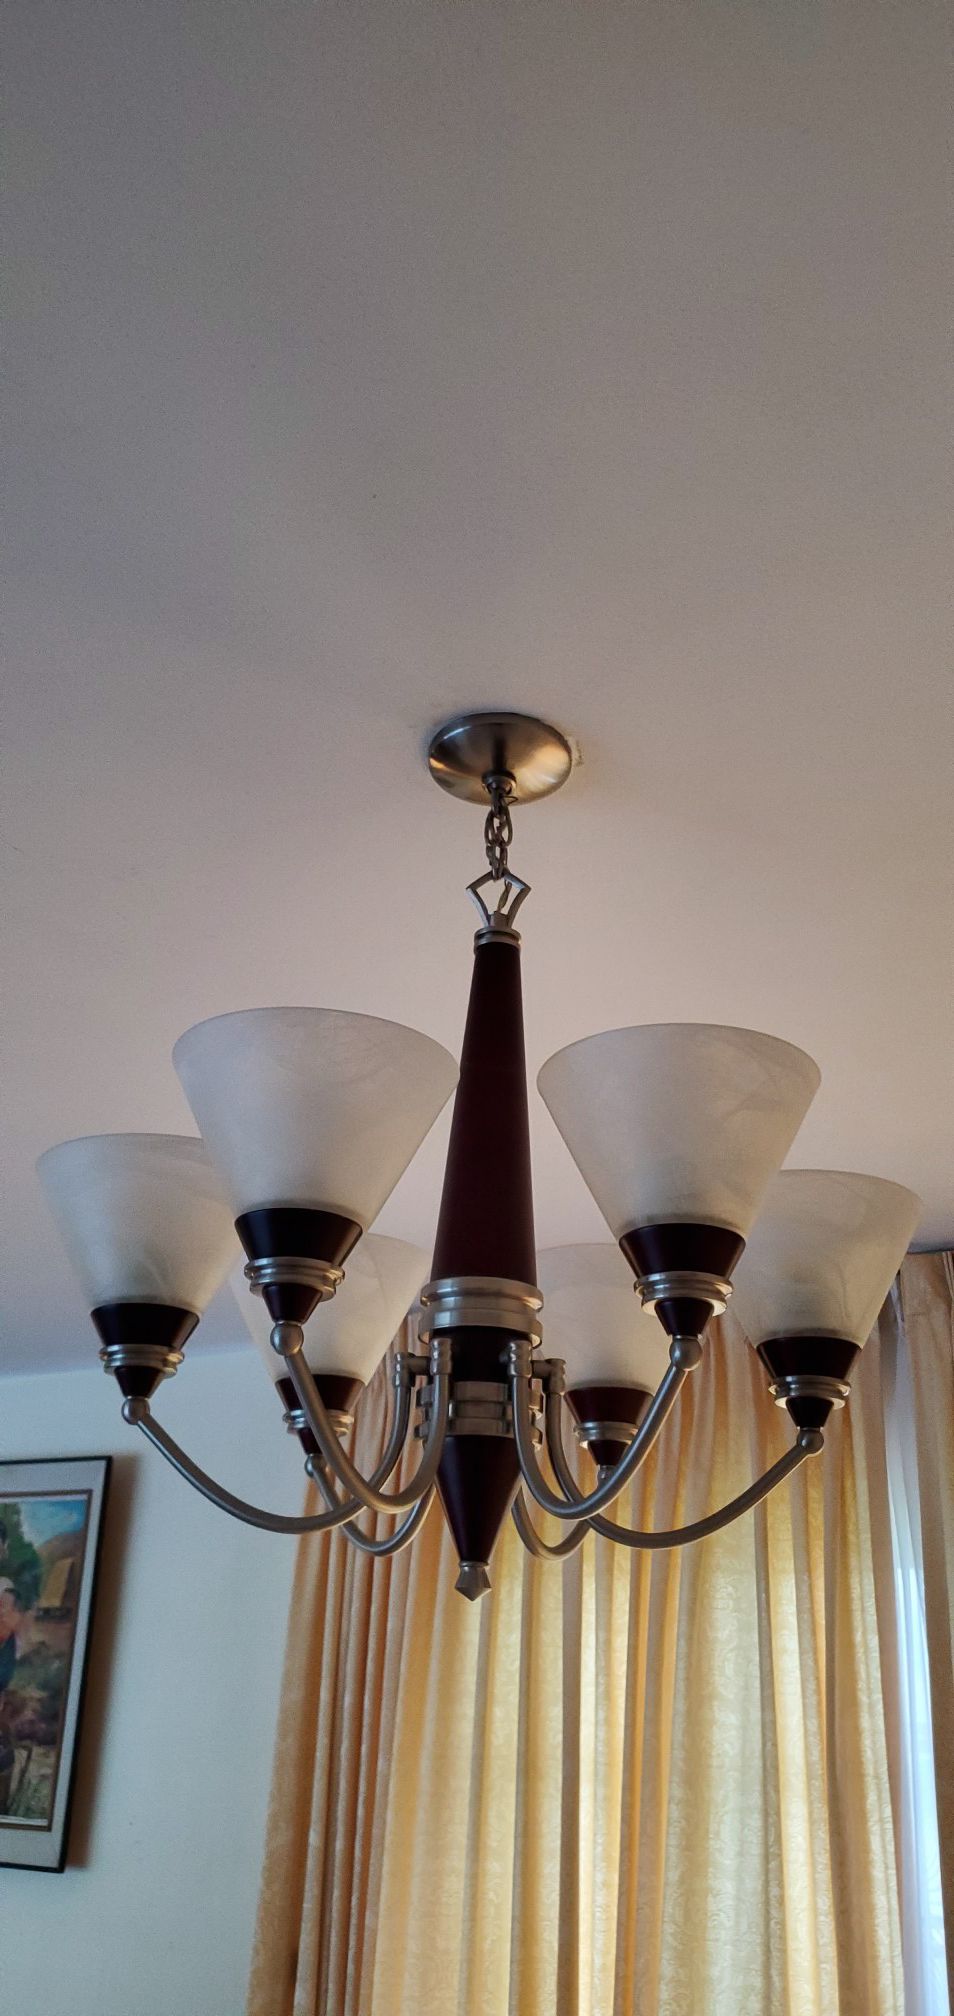 Overhead lamp/light fixture